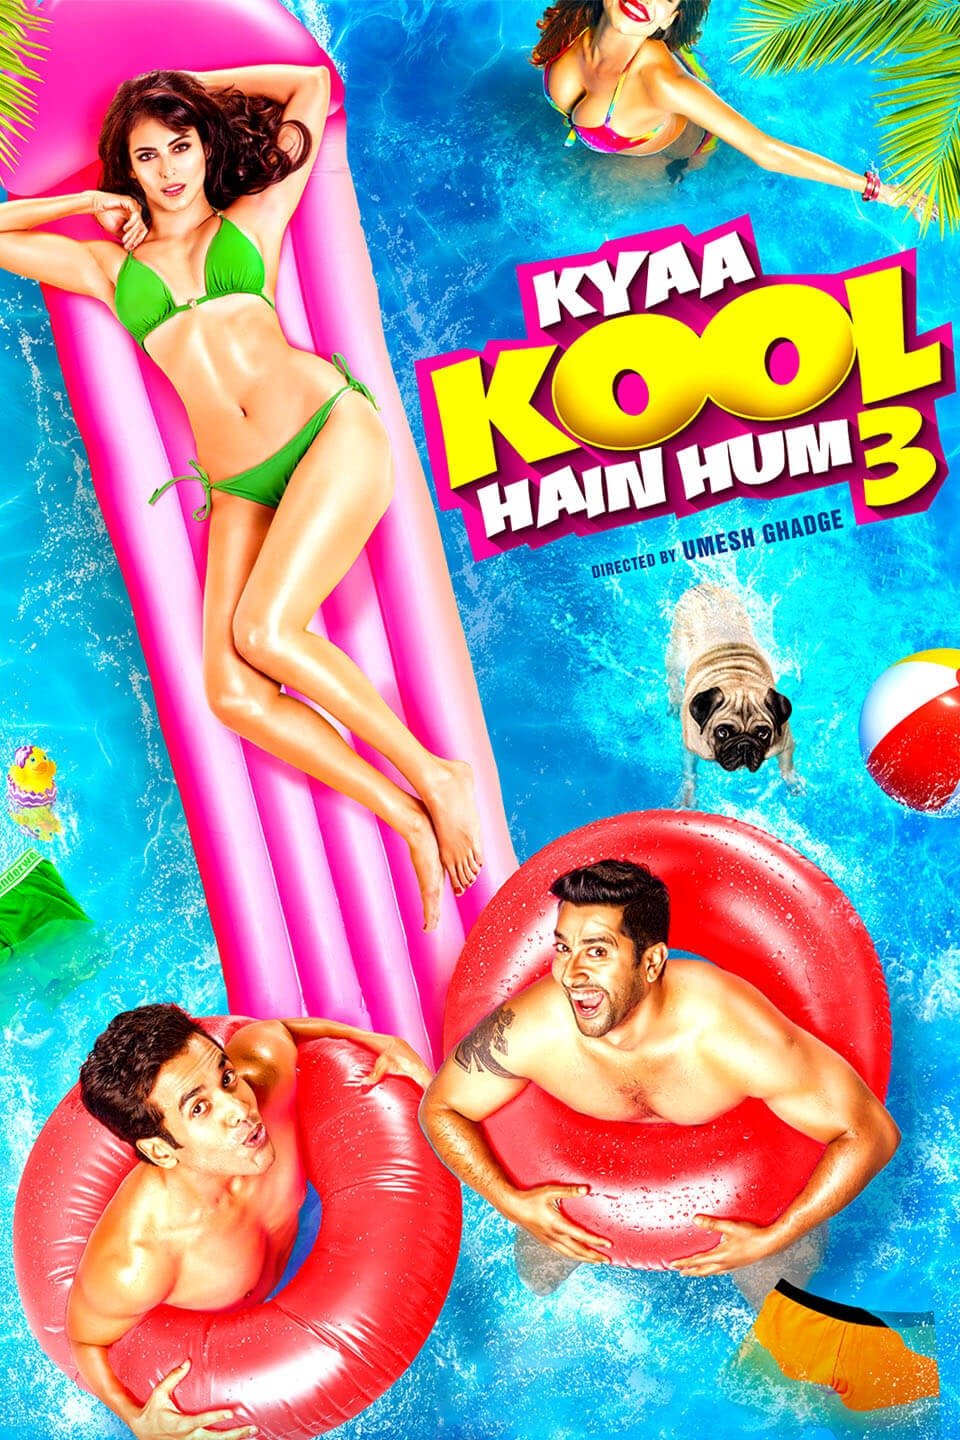 Kyaa Kool Hain Hum 3 (2022) HDRip hindi Full Movie Watch Online Free MovieRulz